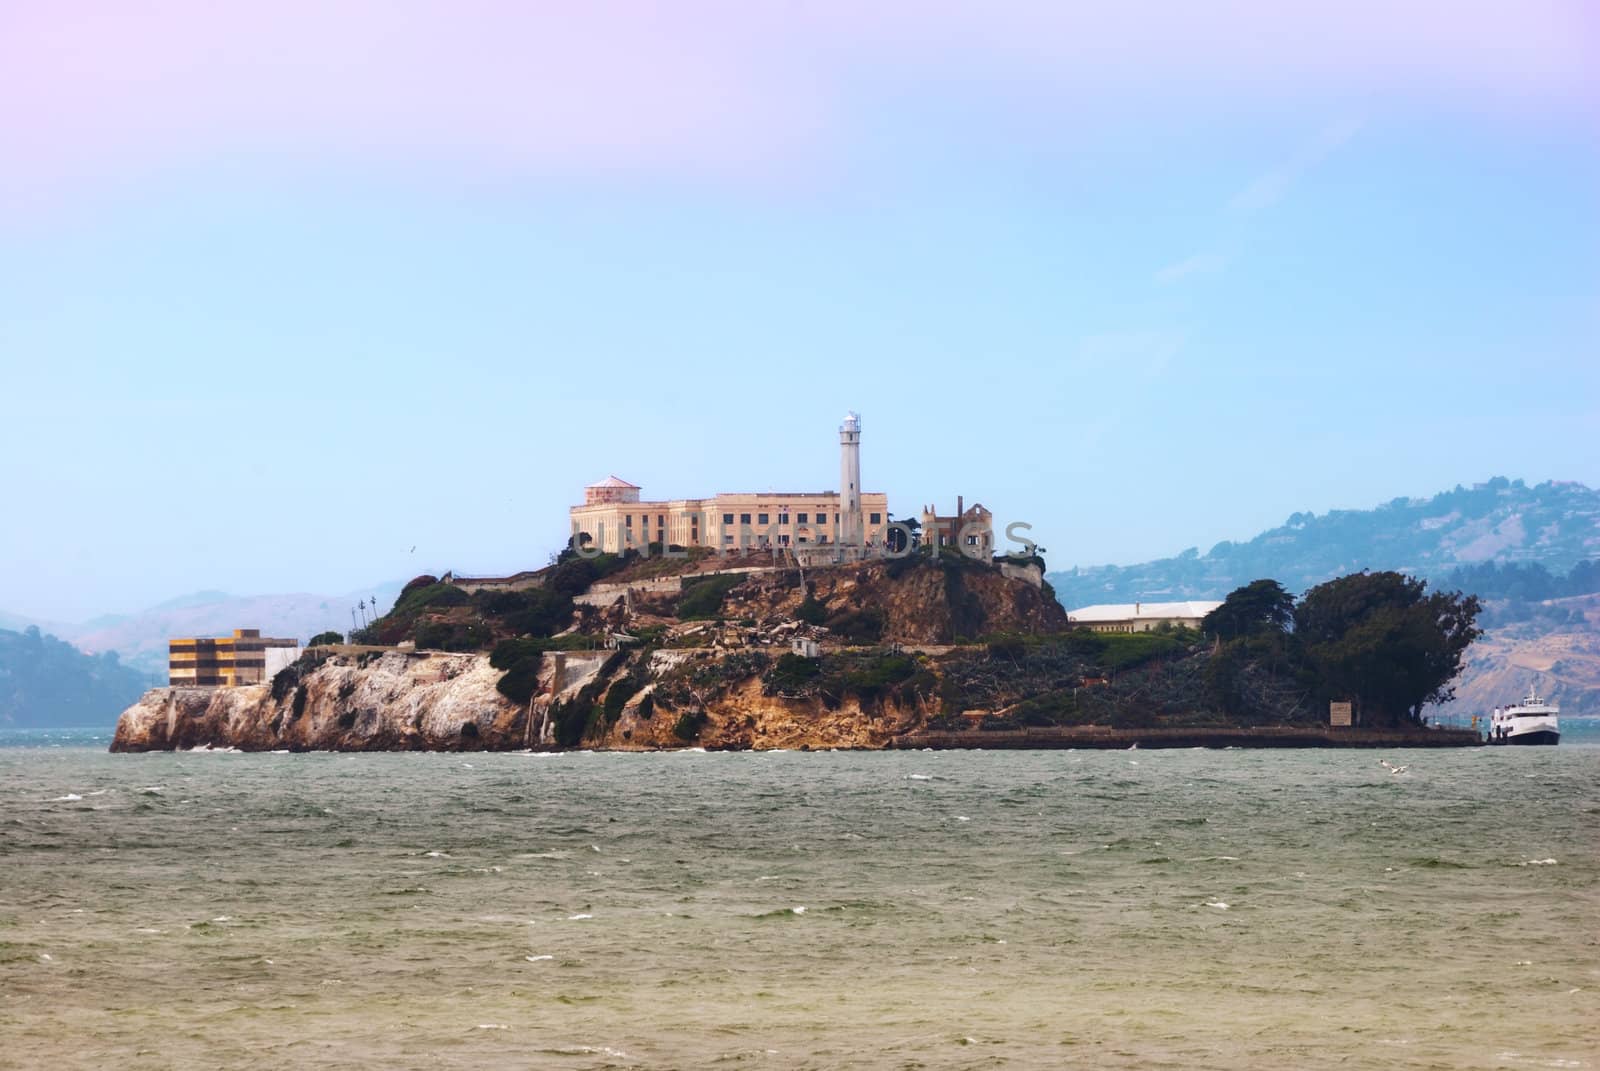 Alcatraz Island and Prison in San Francisco Bay  by goldenangel